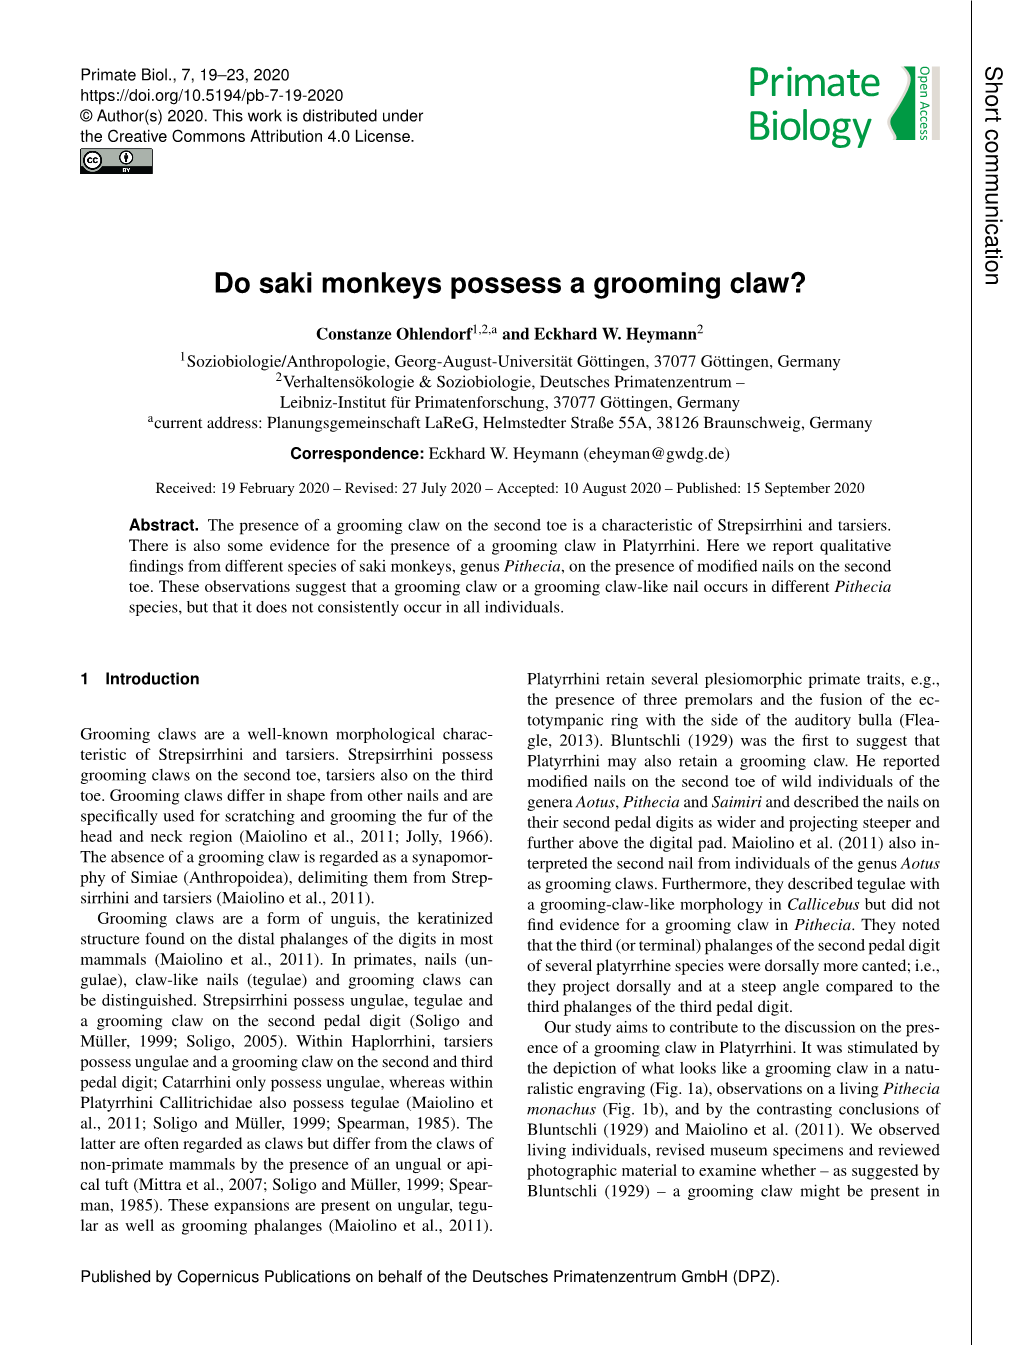 Do Saki Monkeys Possess a Grooming Claw?